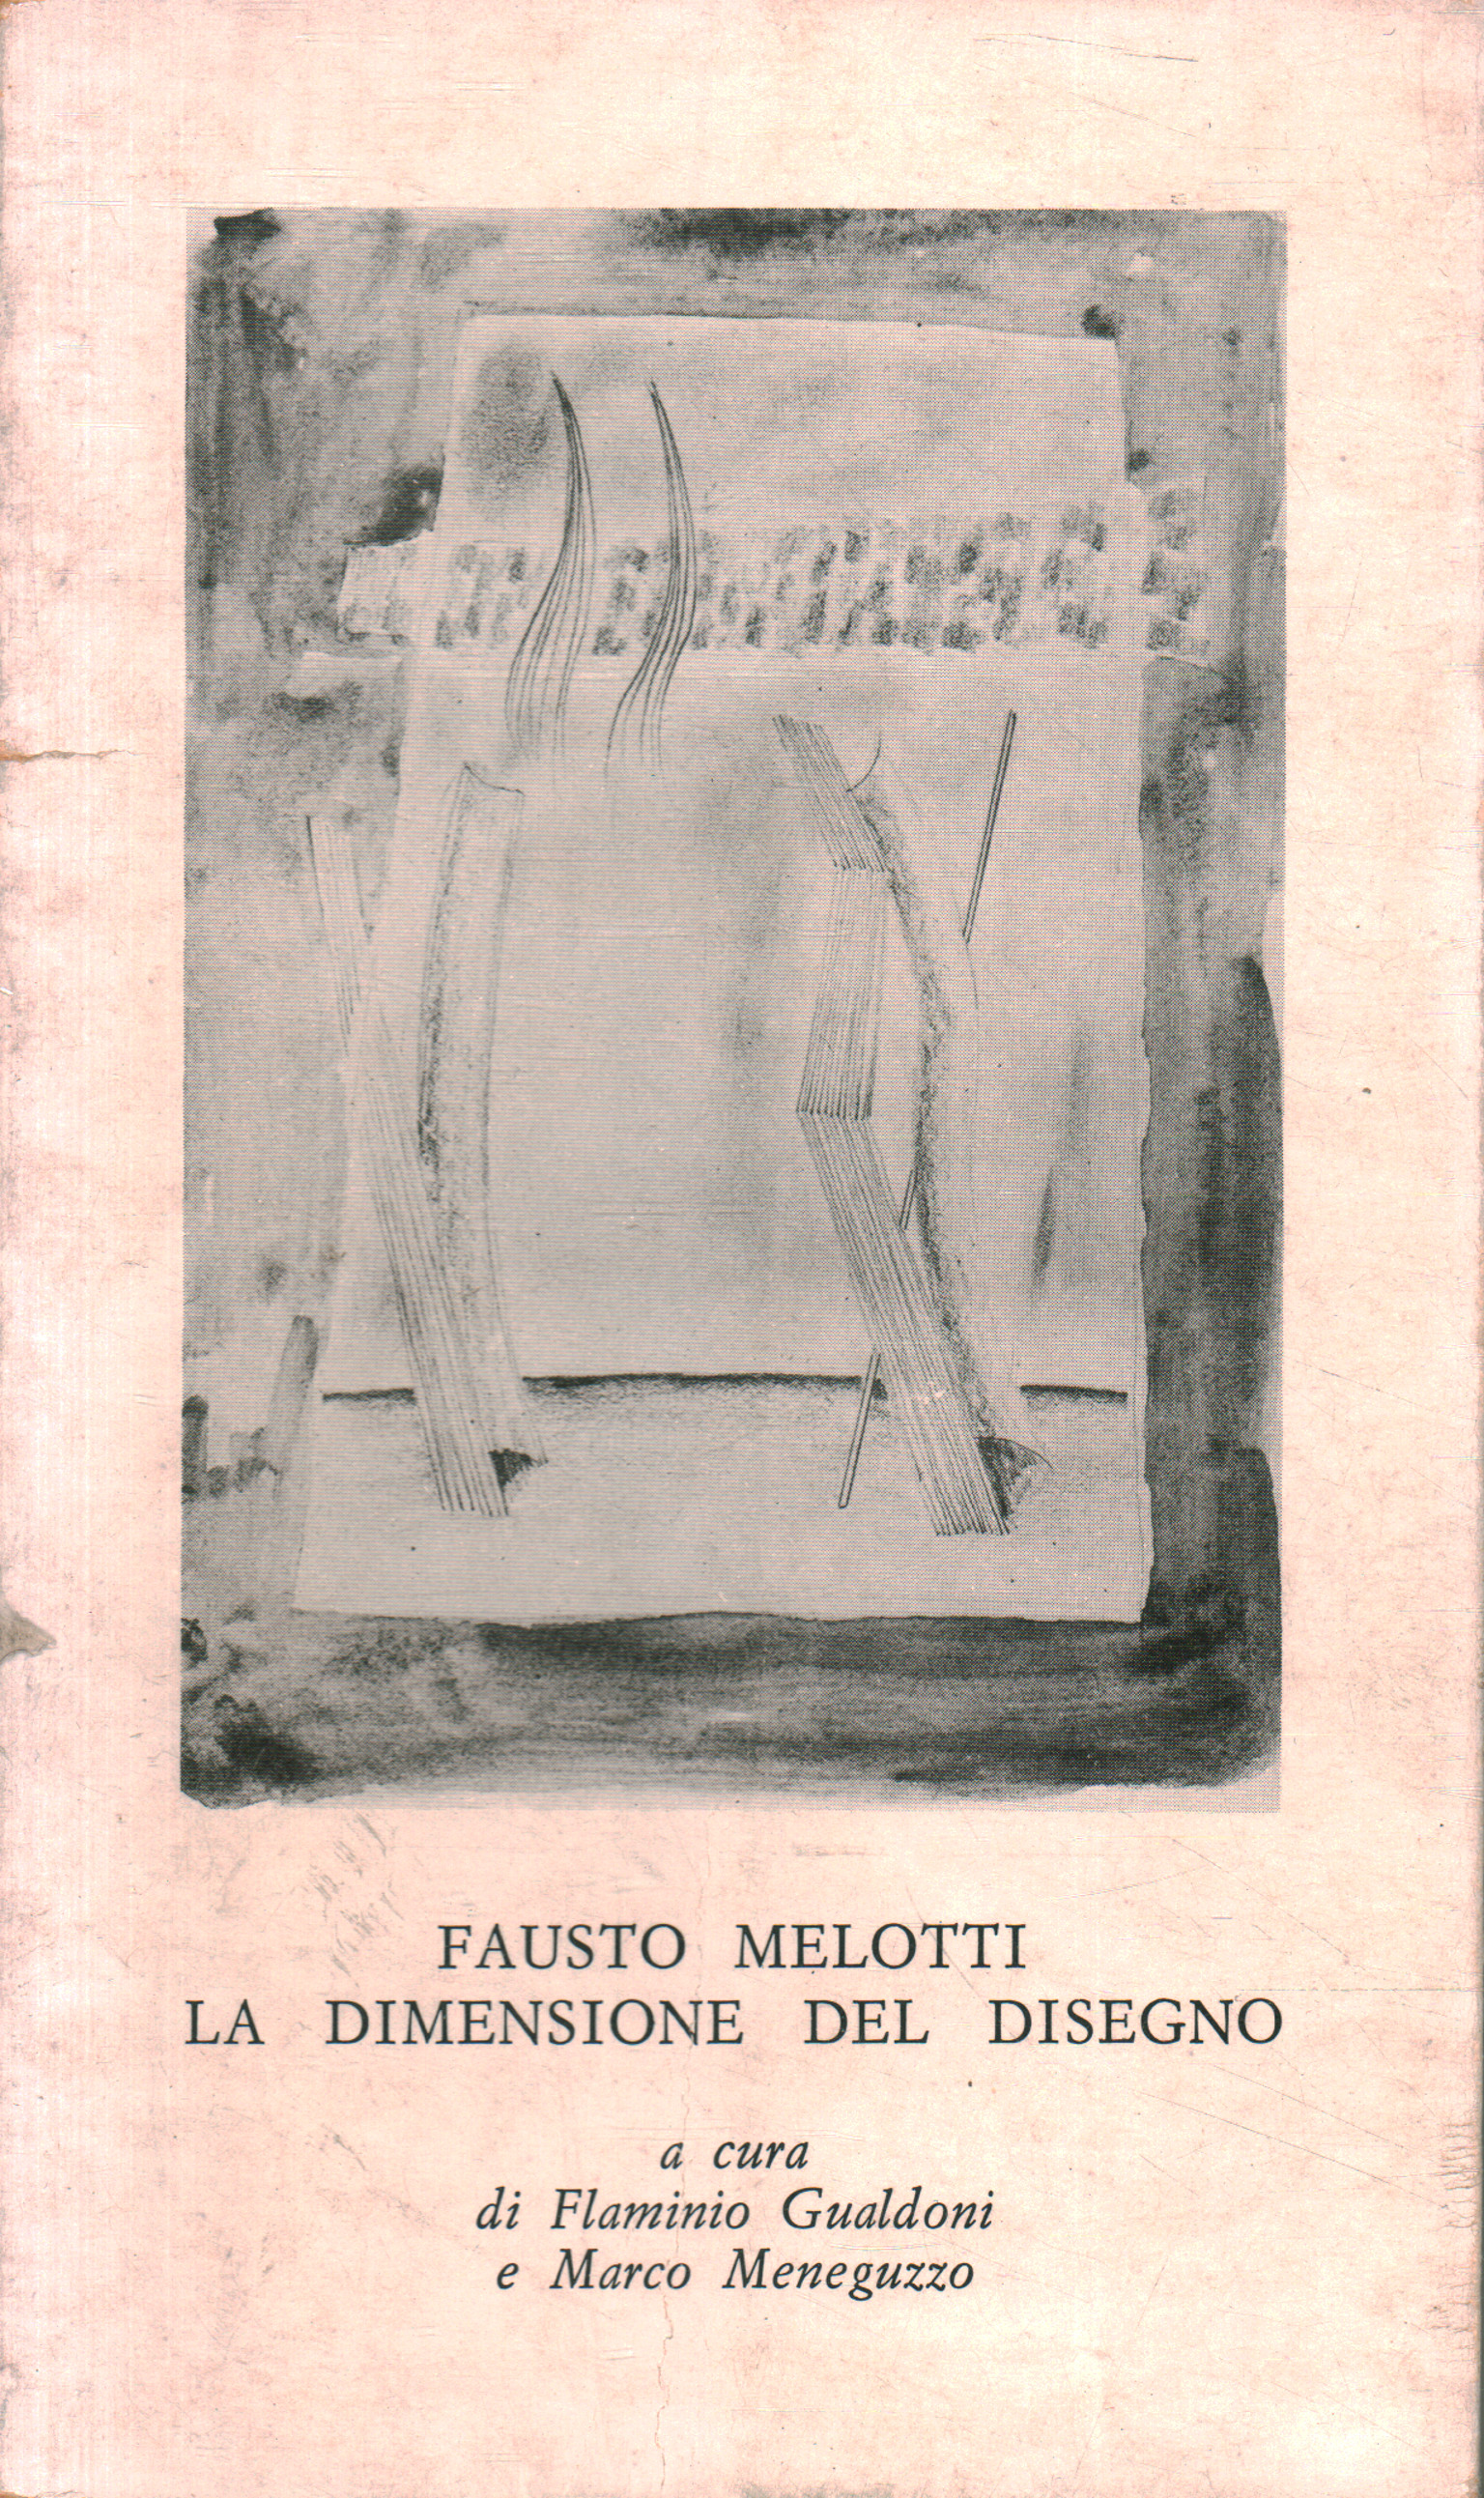 Fausto Melotti. El tamaño del dibujo.